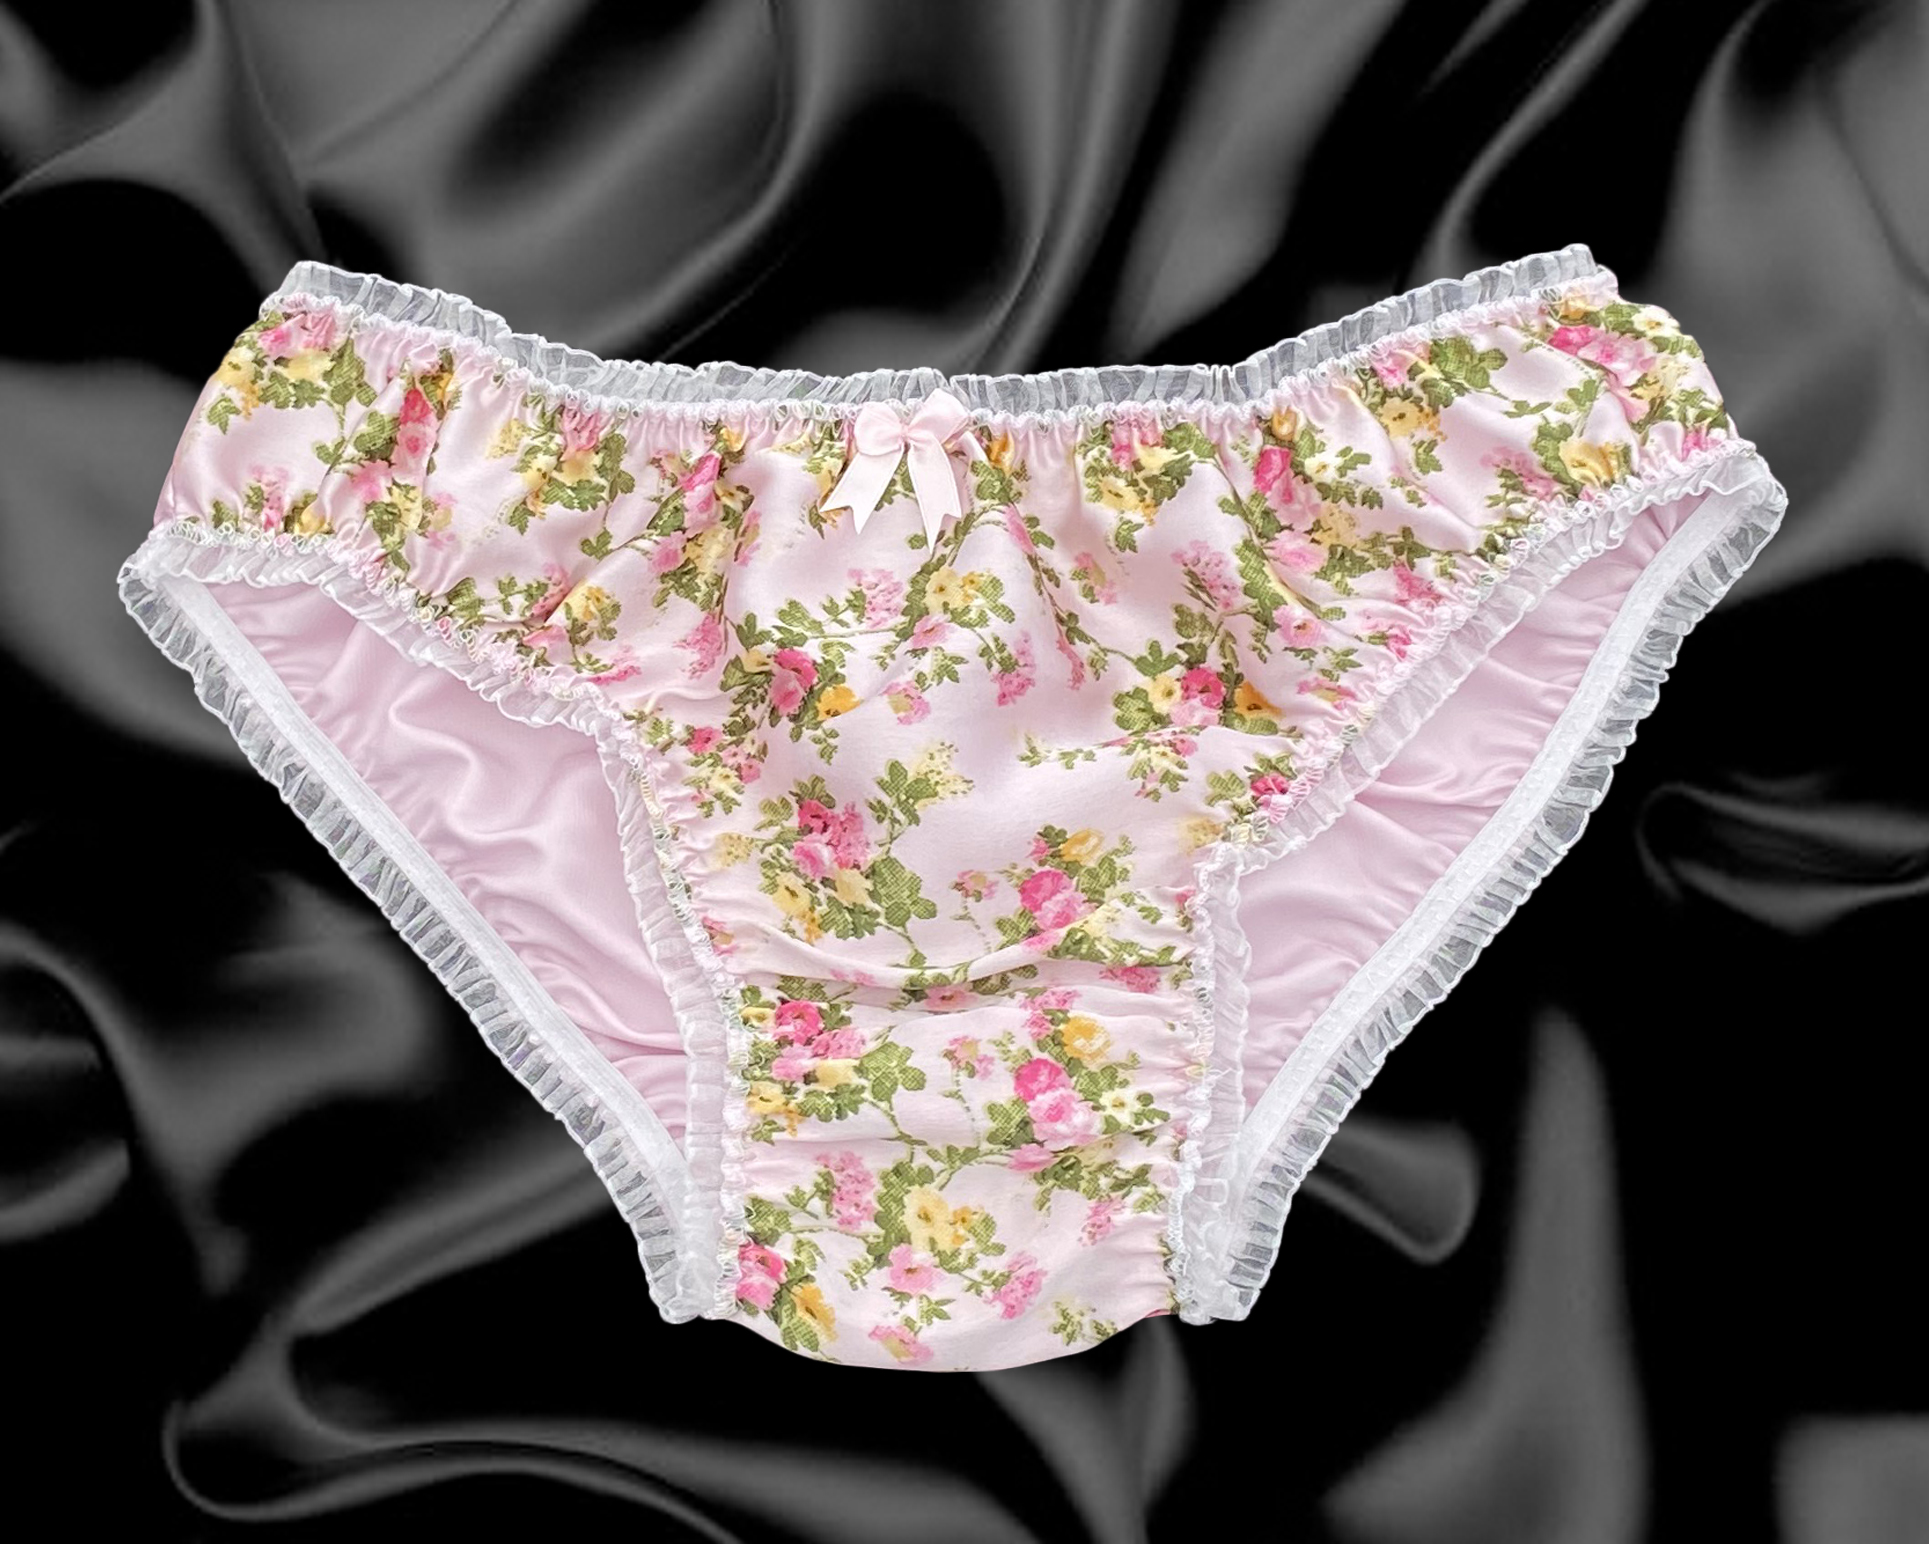 Pale Lemon Bikini Style Sissy Panties-soft Satin Knickers daisieslacebows  Made to Order Medium up to Extra Extra Large 